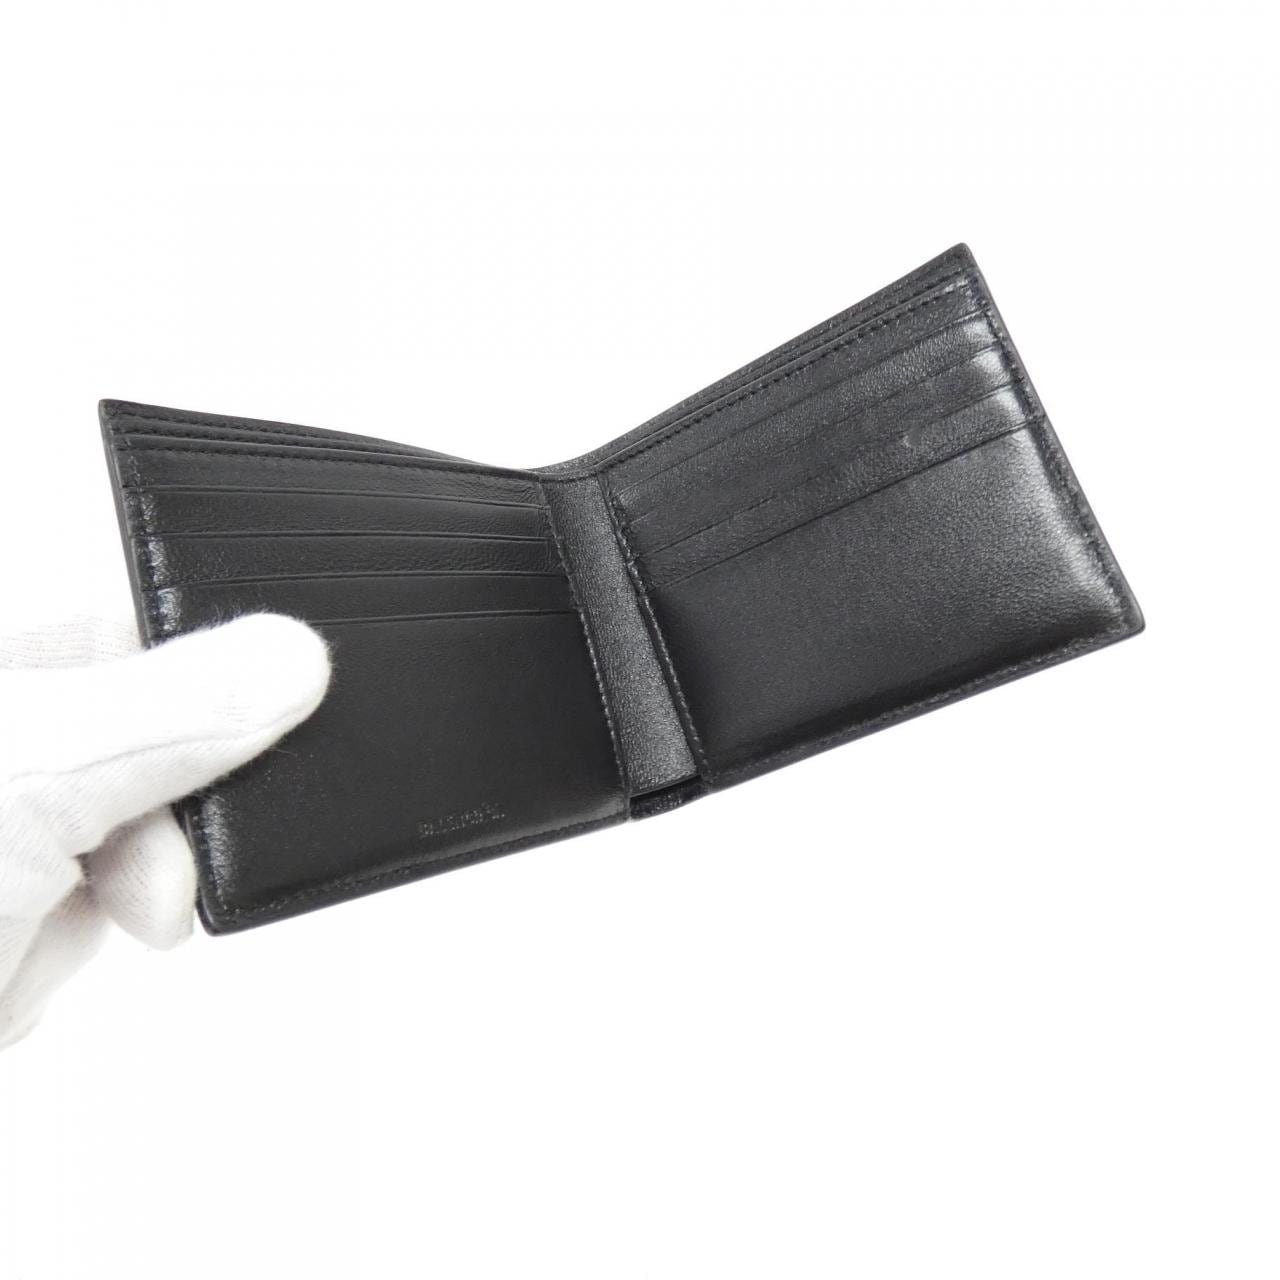 [BRAND NEW] BALENCIAGA Cash Square Fold Wallet 594549 1IZI3 Billfold